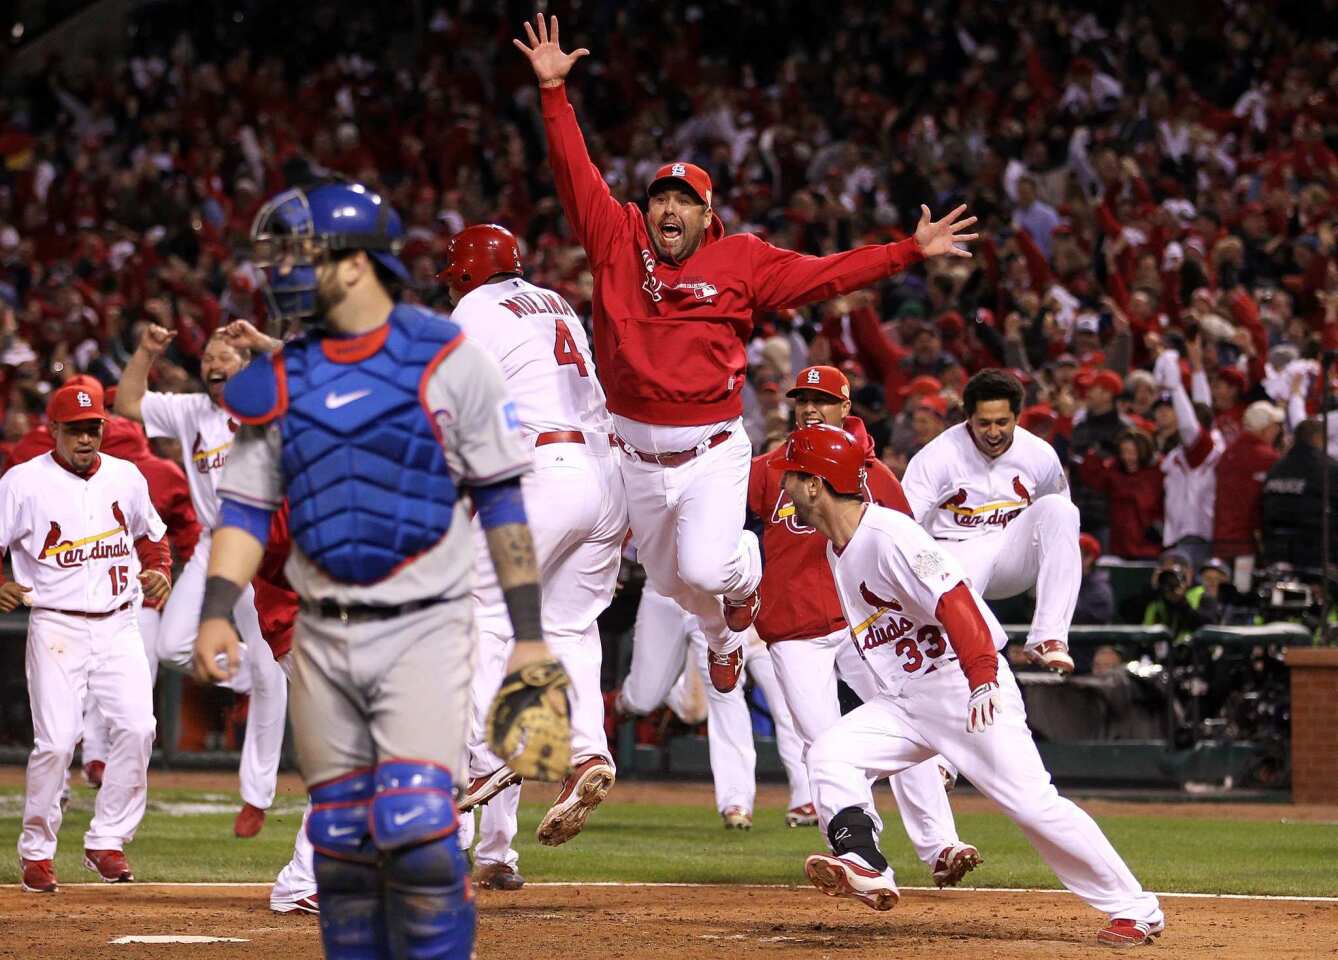 Cardinals host Rangers in 2011 World Series rematch